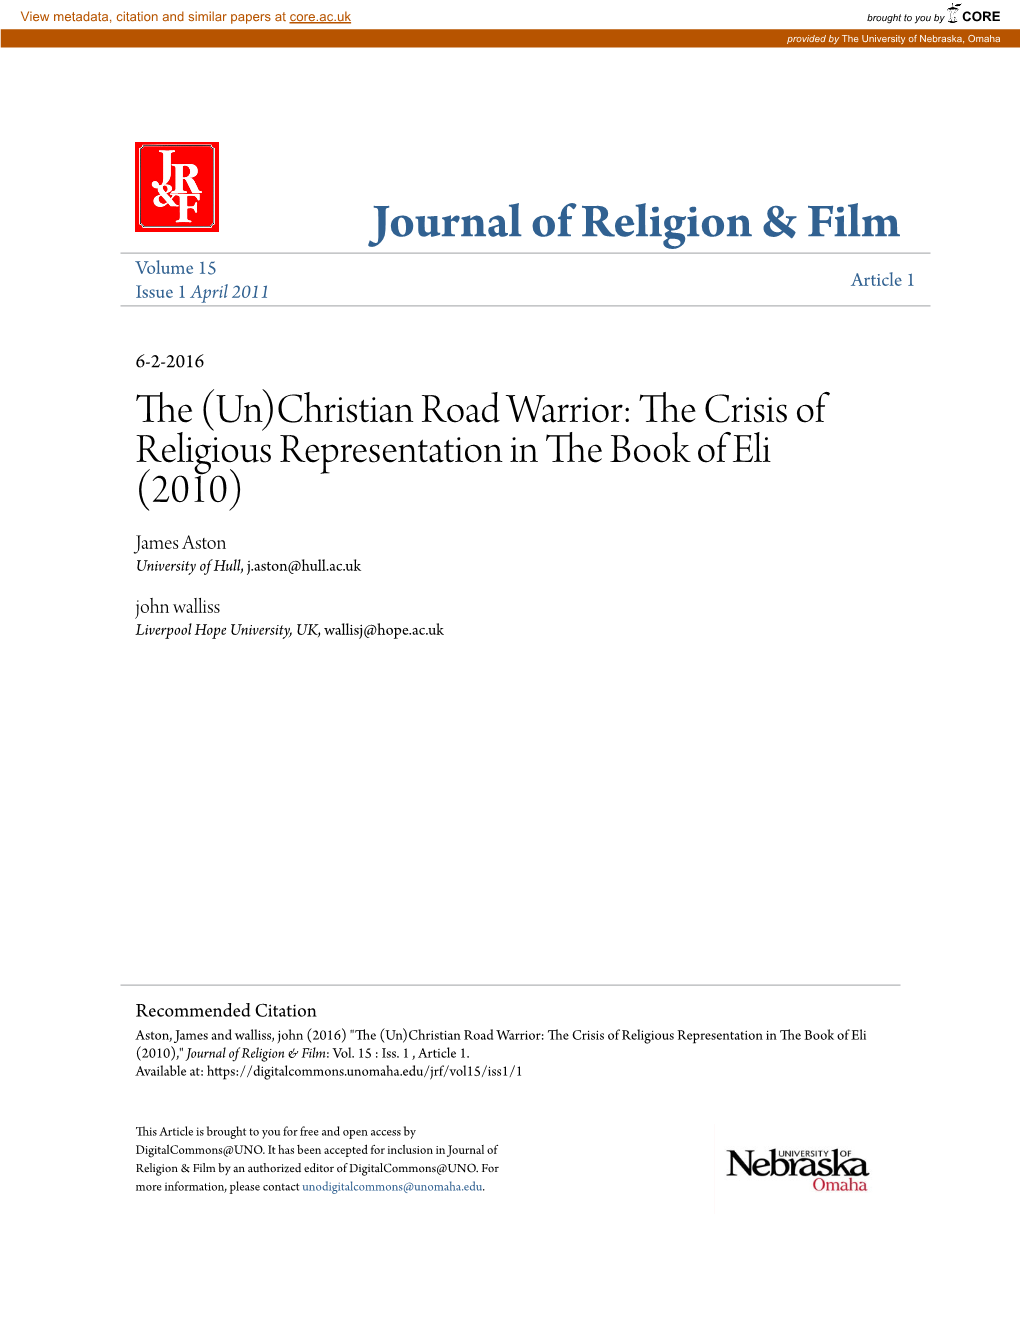 The (Un)Christian Road Warrior: the Crisis of Religious Representation